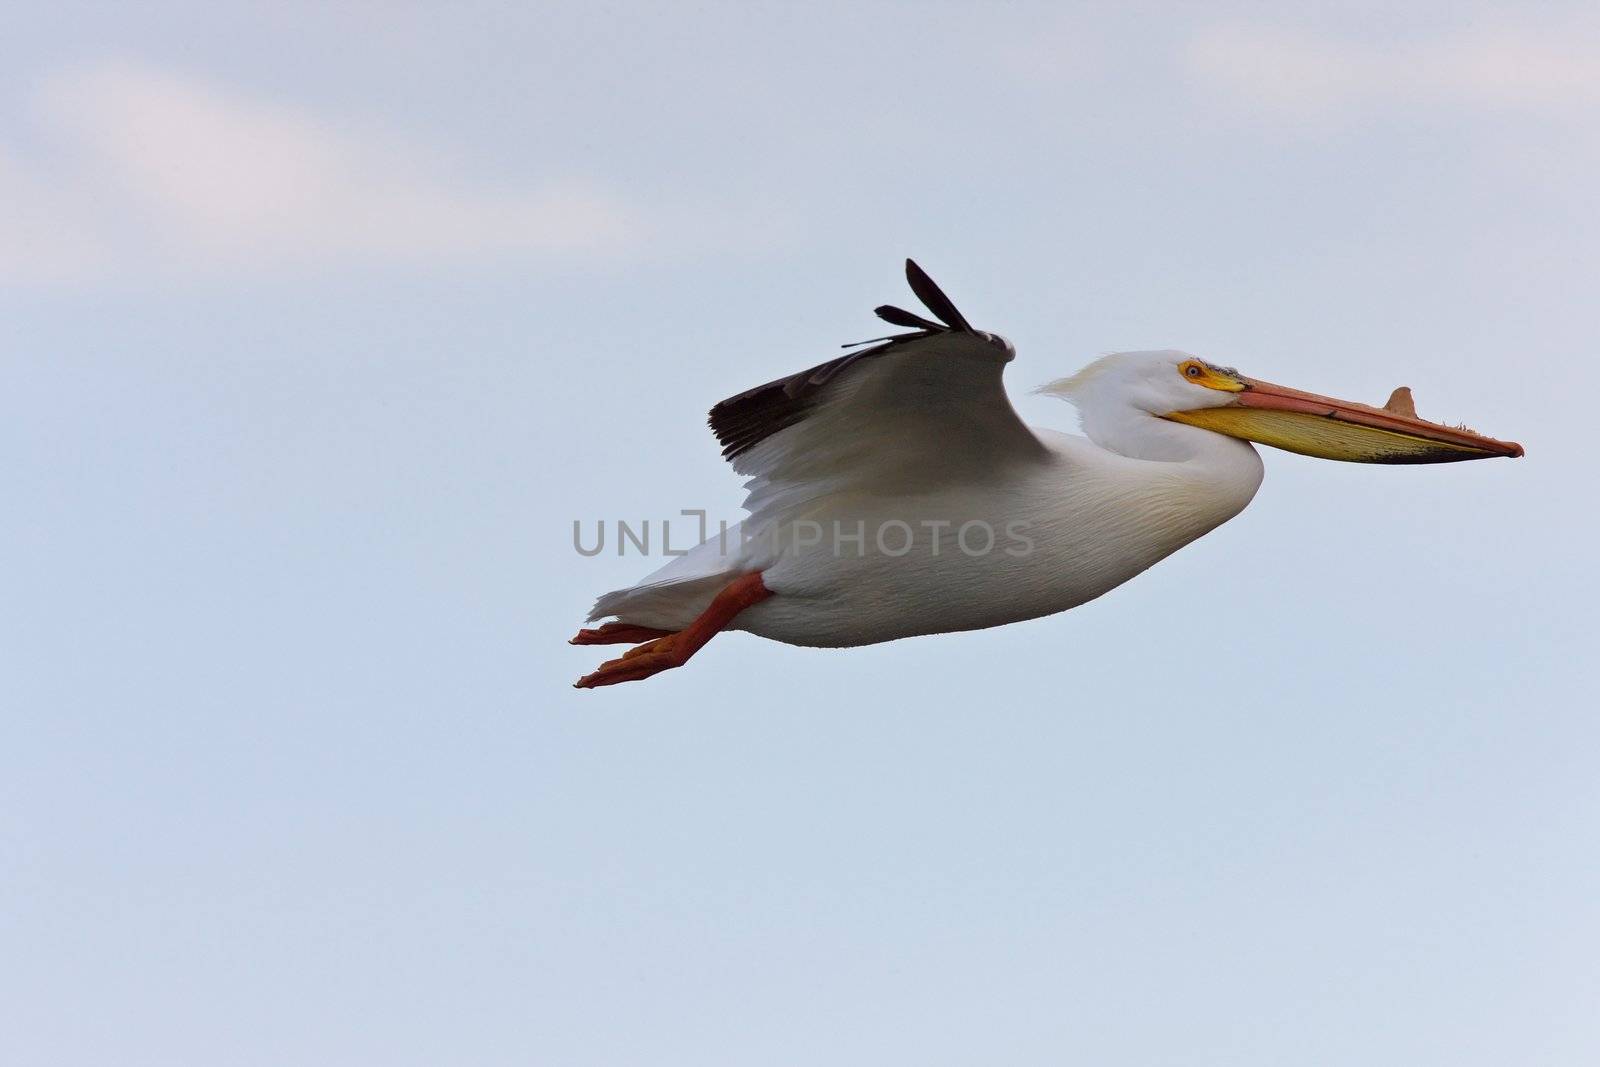 American Pelicans i n Flight by pictureguy